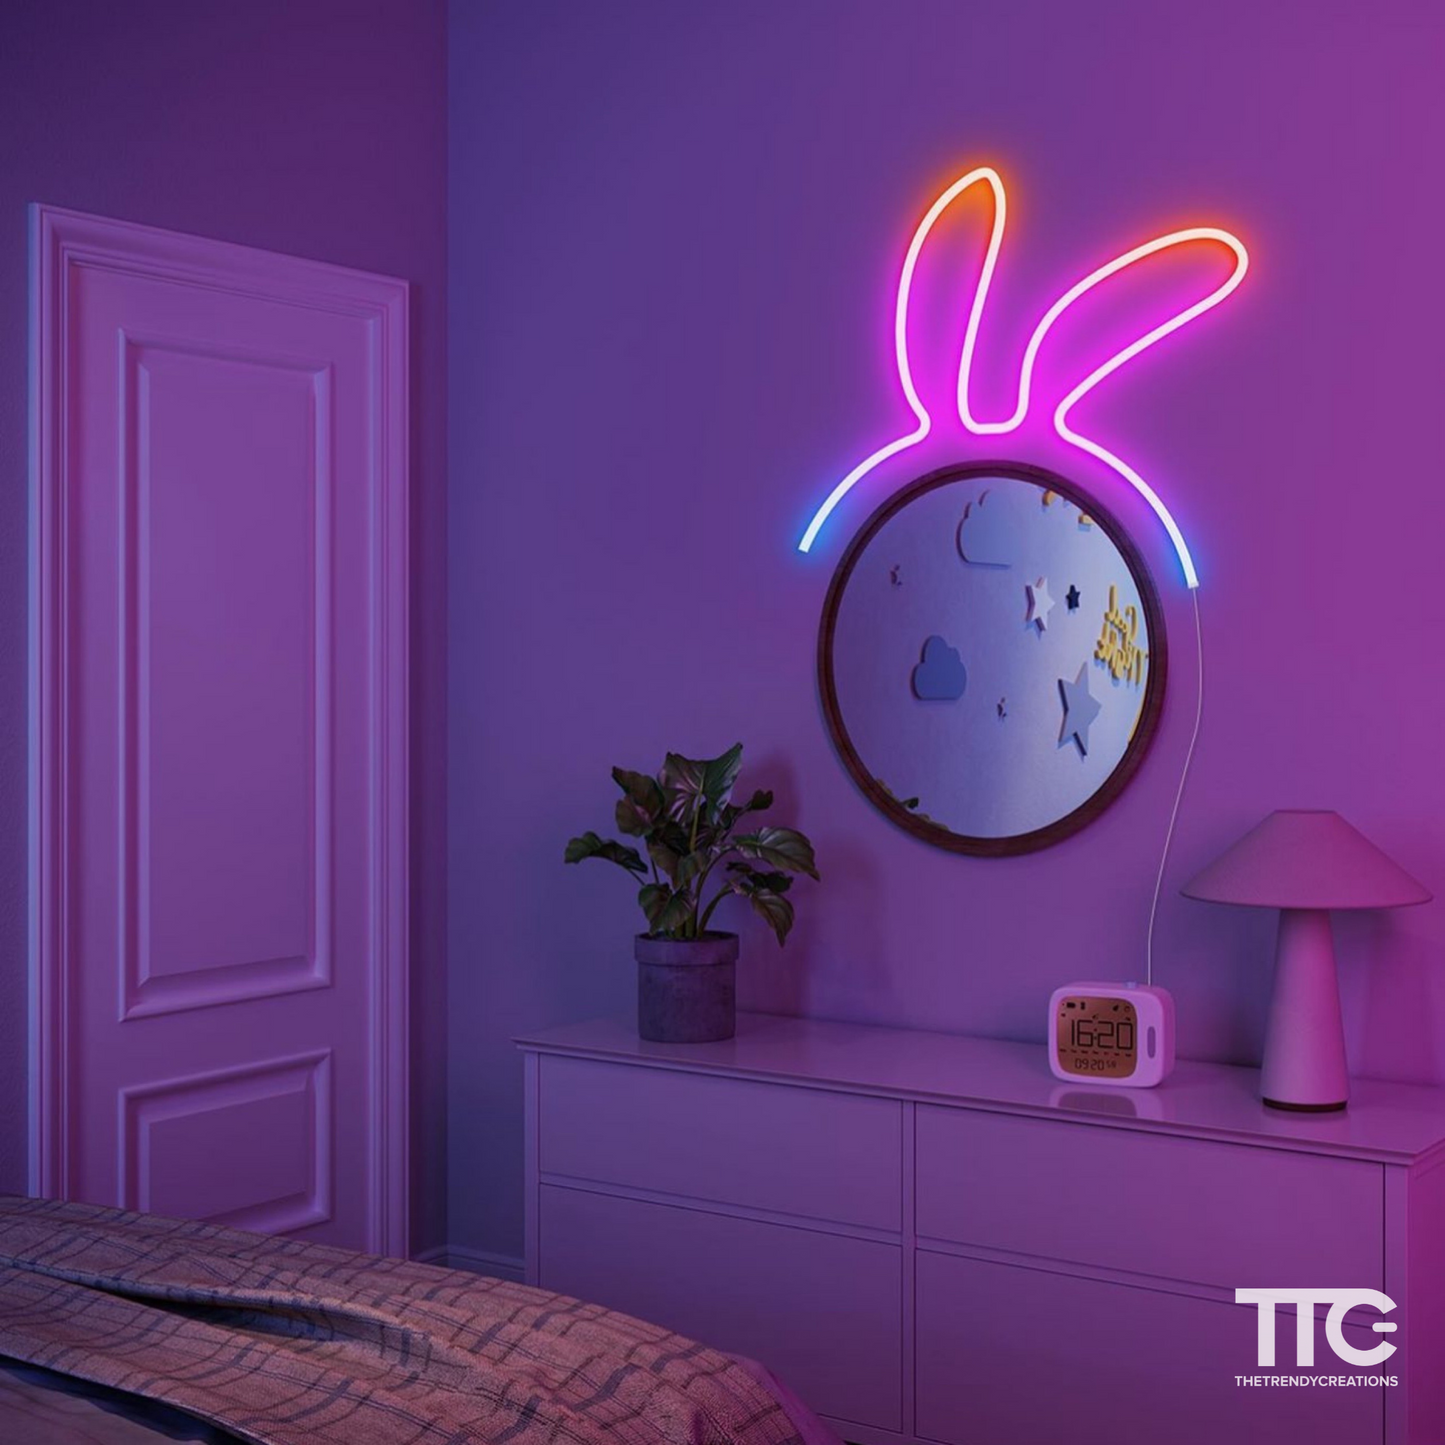 TTC RGBIC Neon Rope Light ™